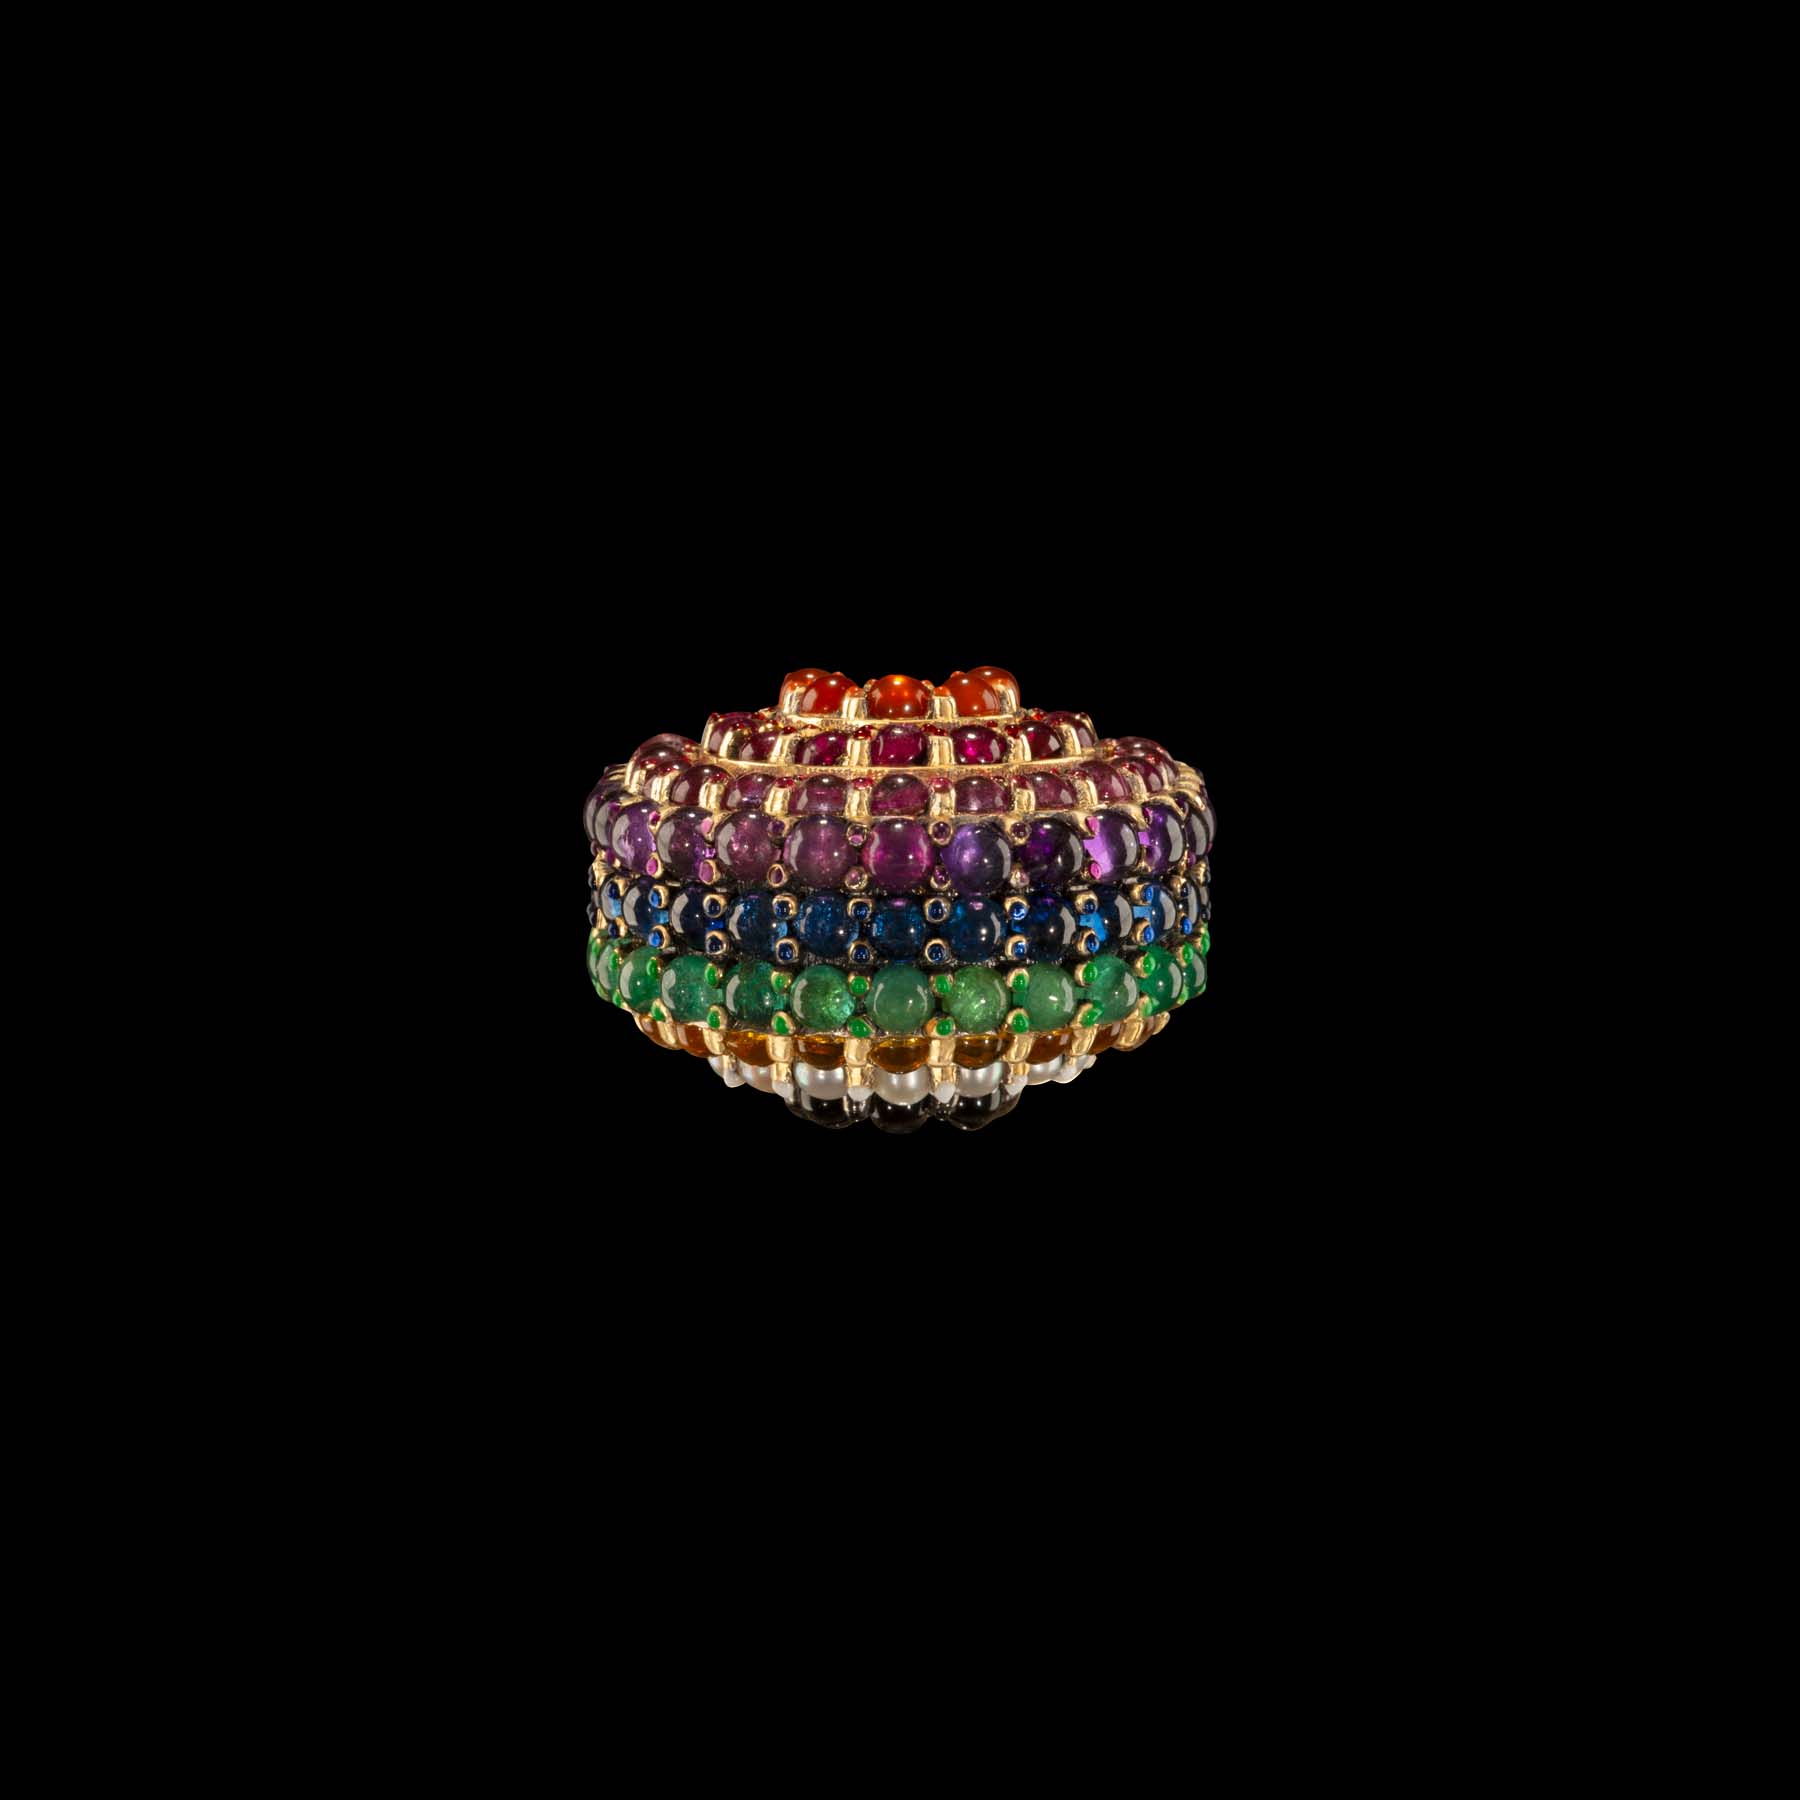 Colourway Rainbow ring by designer Solange Azagury-Partridge - 18k Yellow Gold, gemstones and enamel - orizontal front view